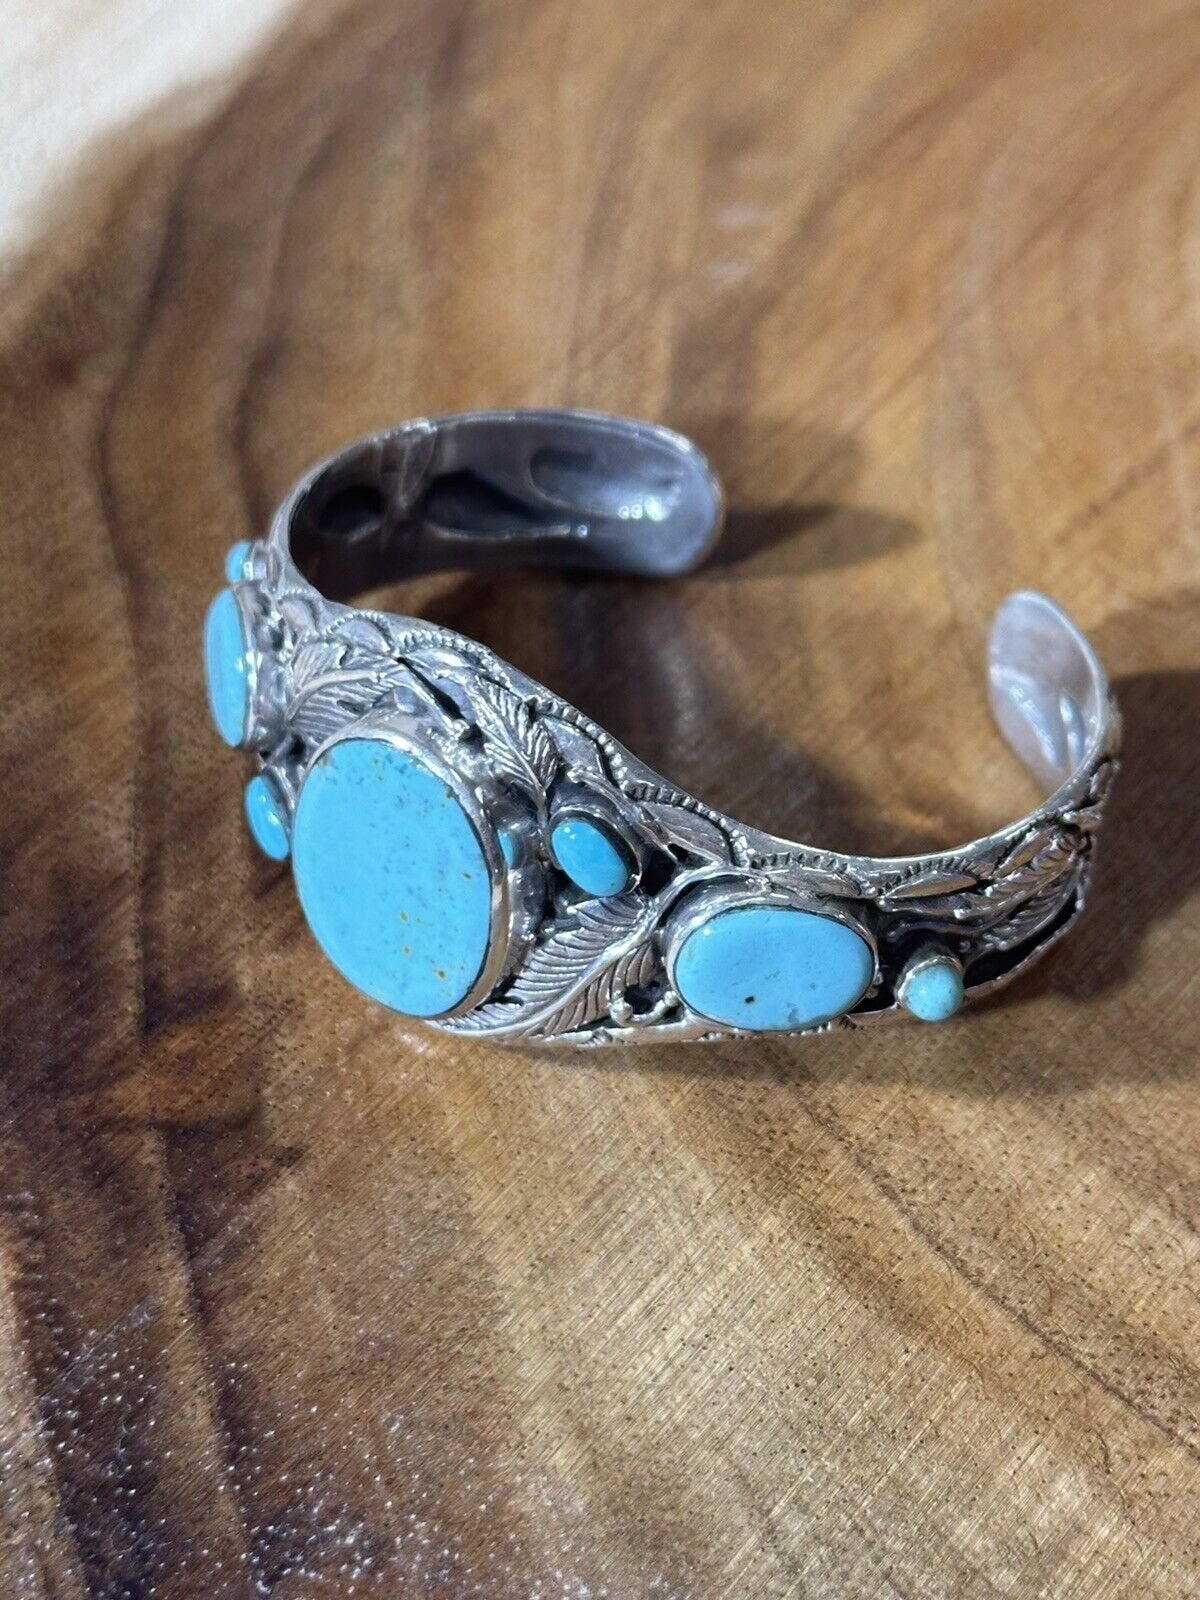 Kingman Turquoise bracelet 925 sterling silver cuff bangle Size 6.5